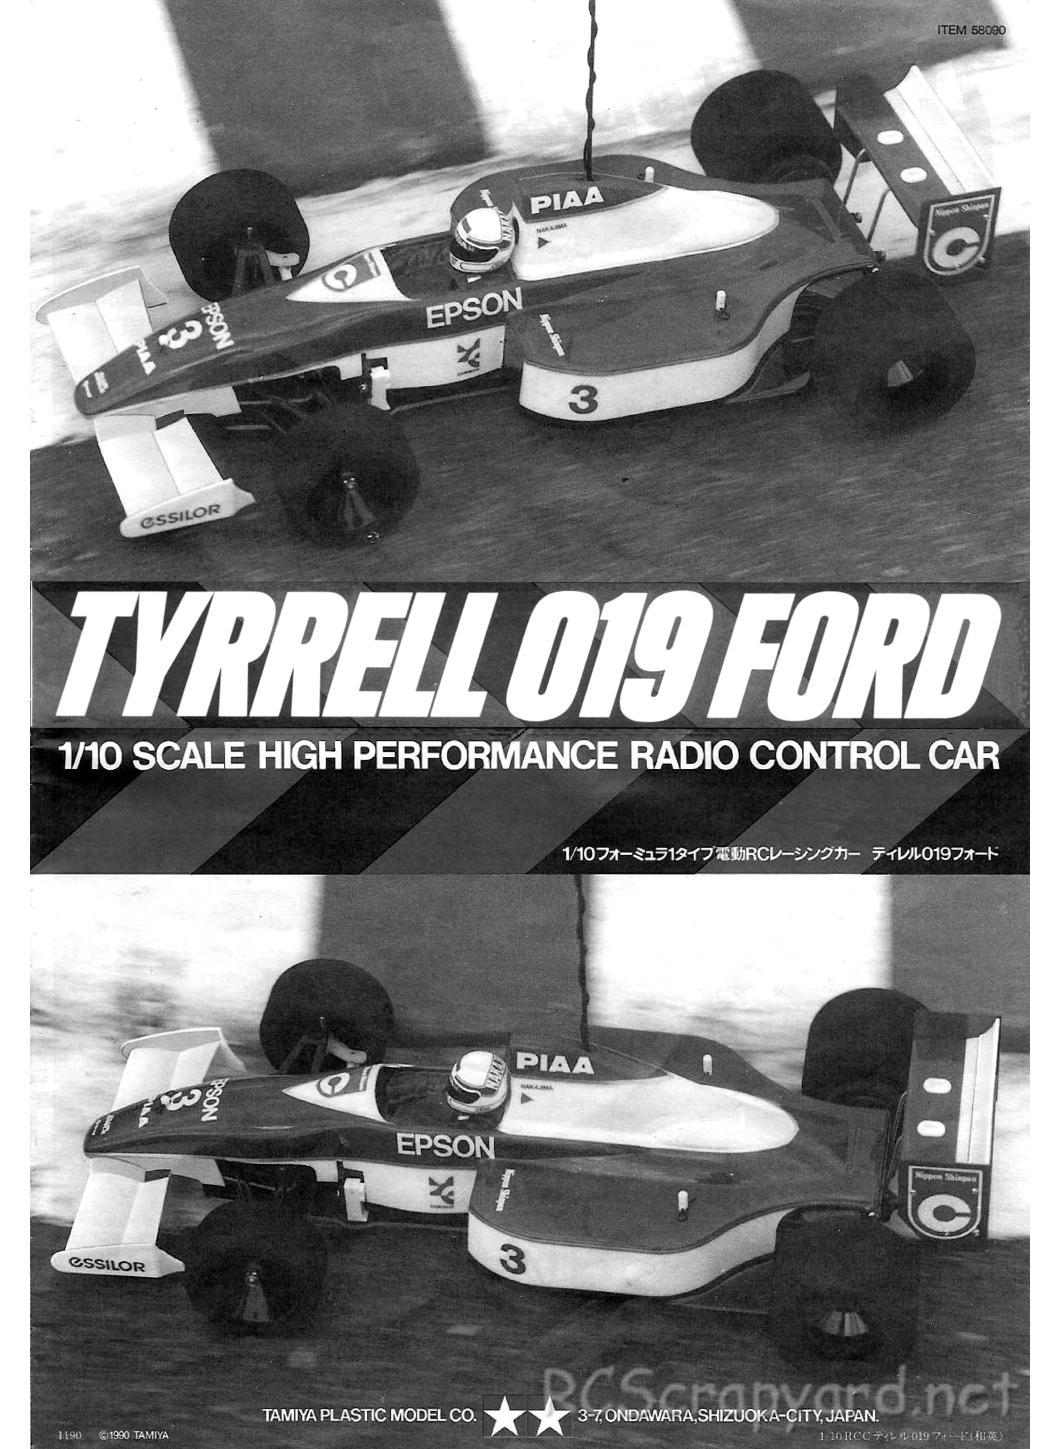 Tamiya - Tyrrell 019 Ford - 58090 - Manual